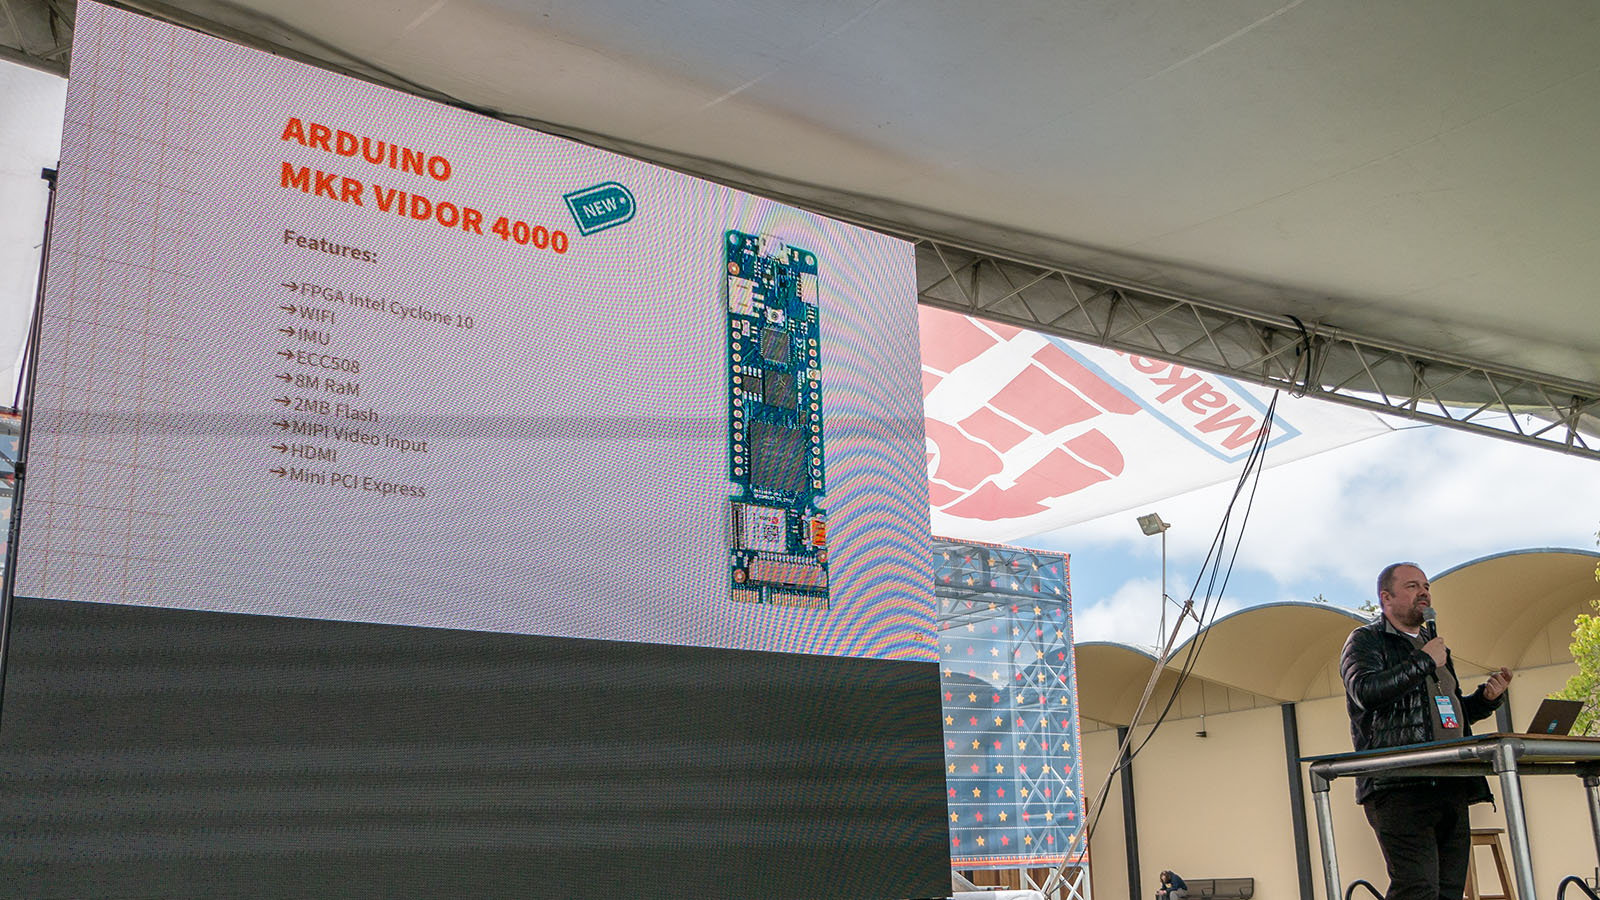 Massimo introducing Arduino MKR Vidor 4000